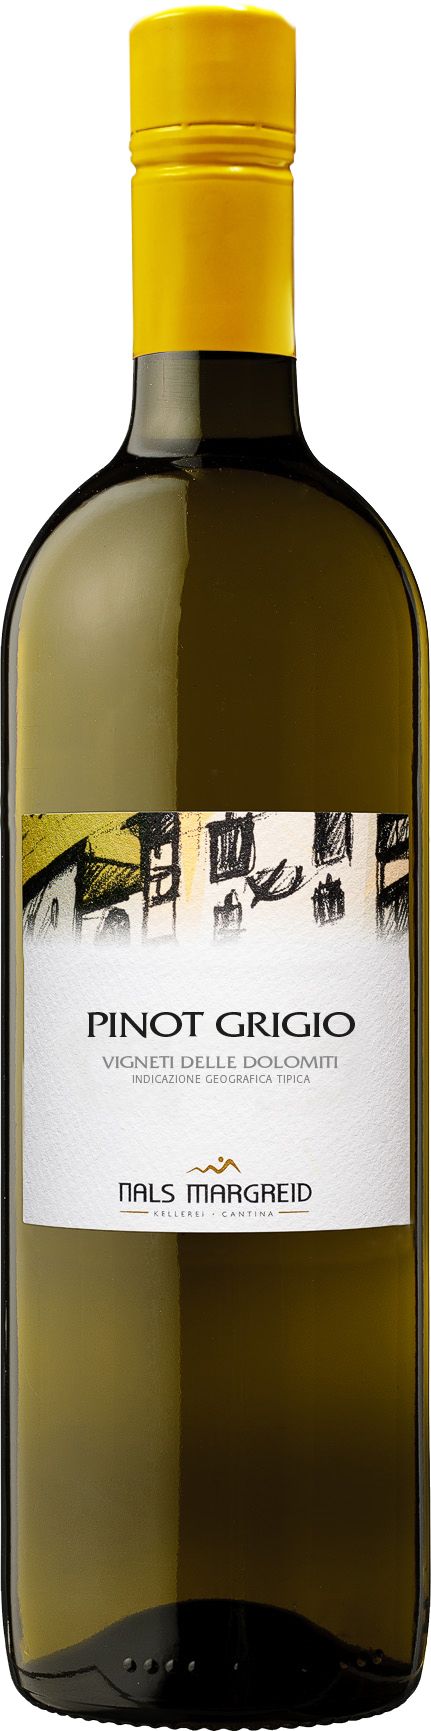 Nals Margreid, Pinot Grigio Vigneti Delle Dolomiti, 2017